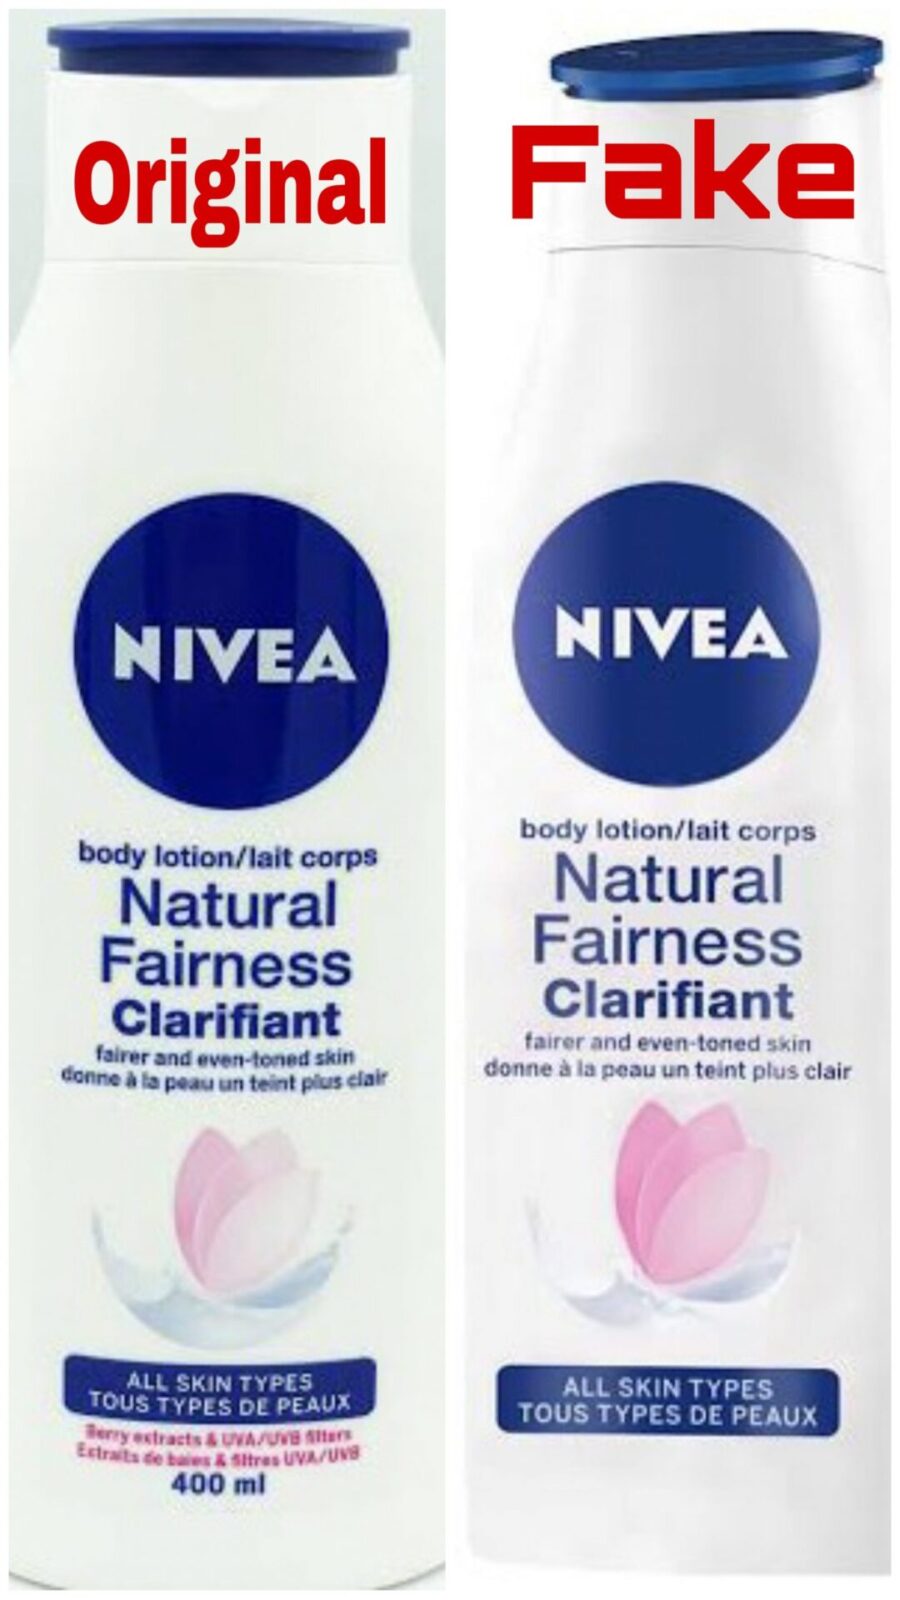 Nivea Natural Fairness Cream